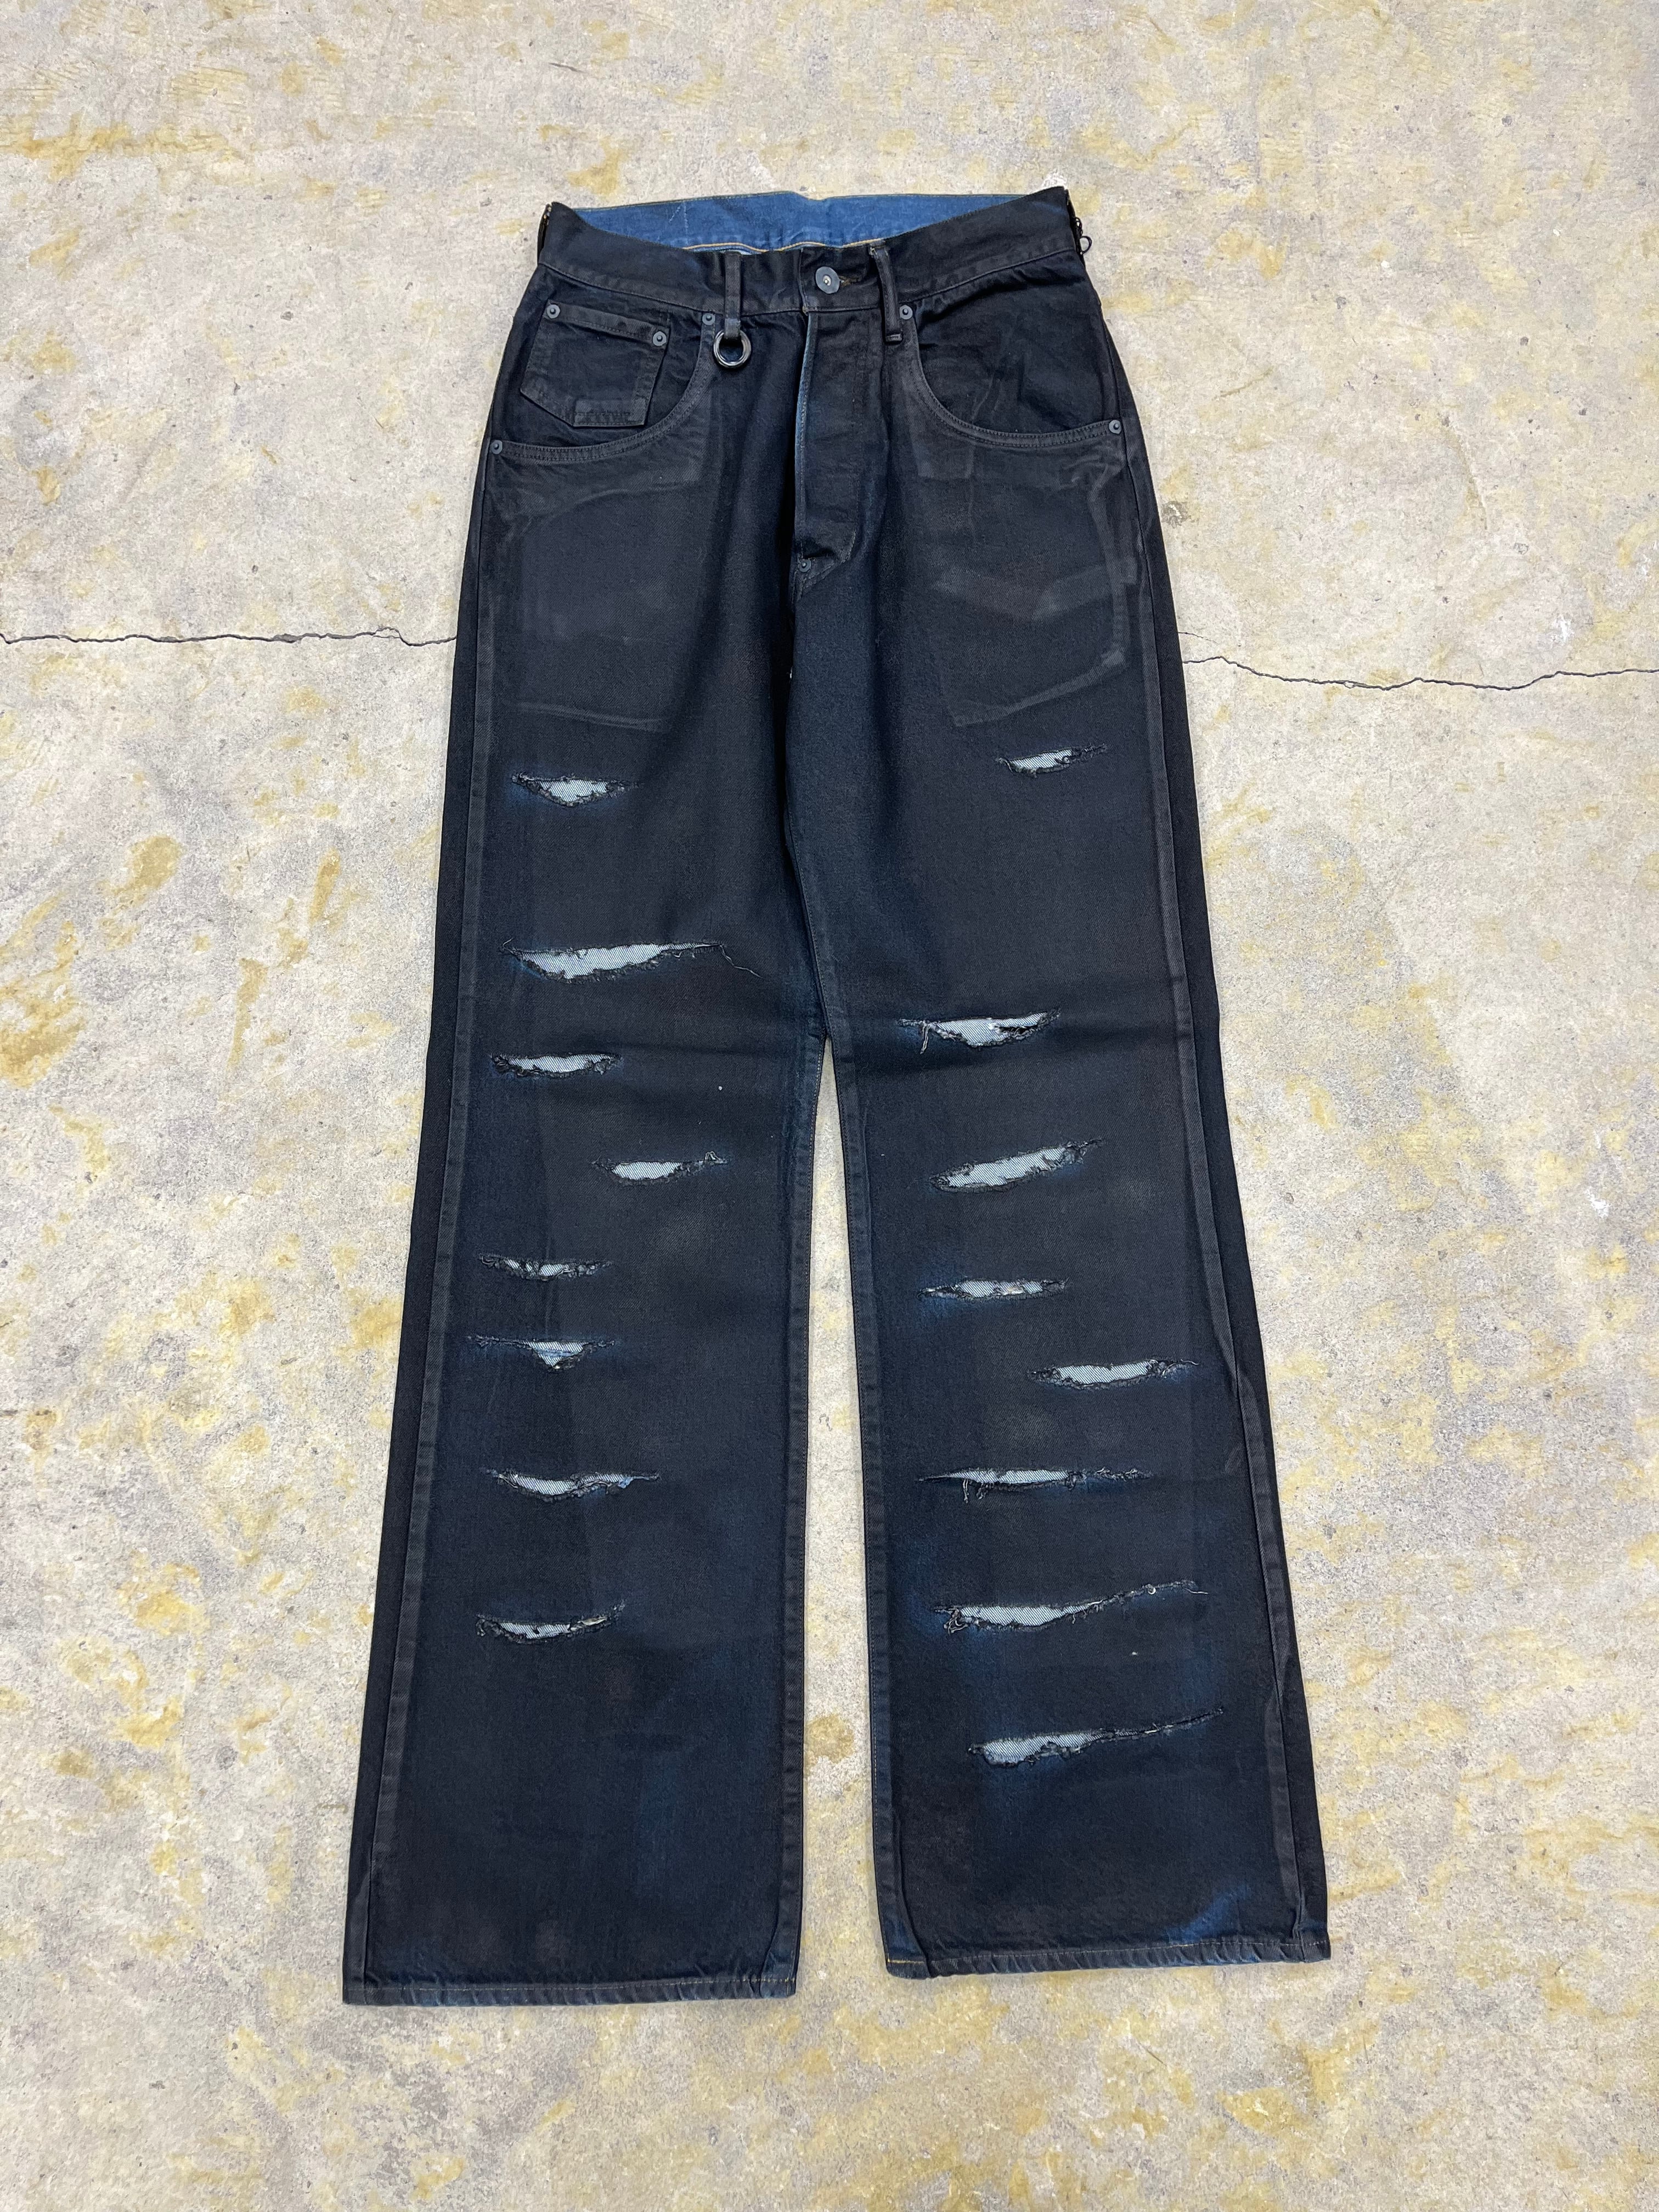 inhzoy Kids Girls High Waist Distressed Flared Jeans Bell Bottom Denim  Trousers Blue 8